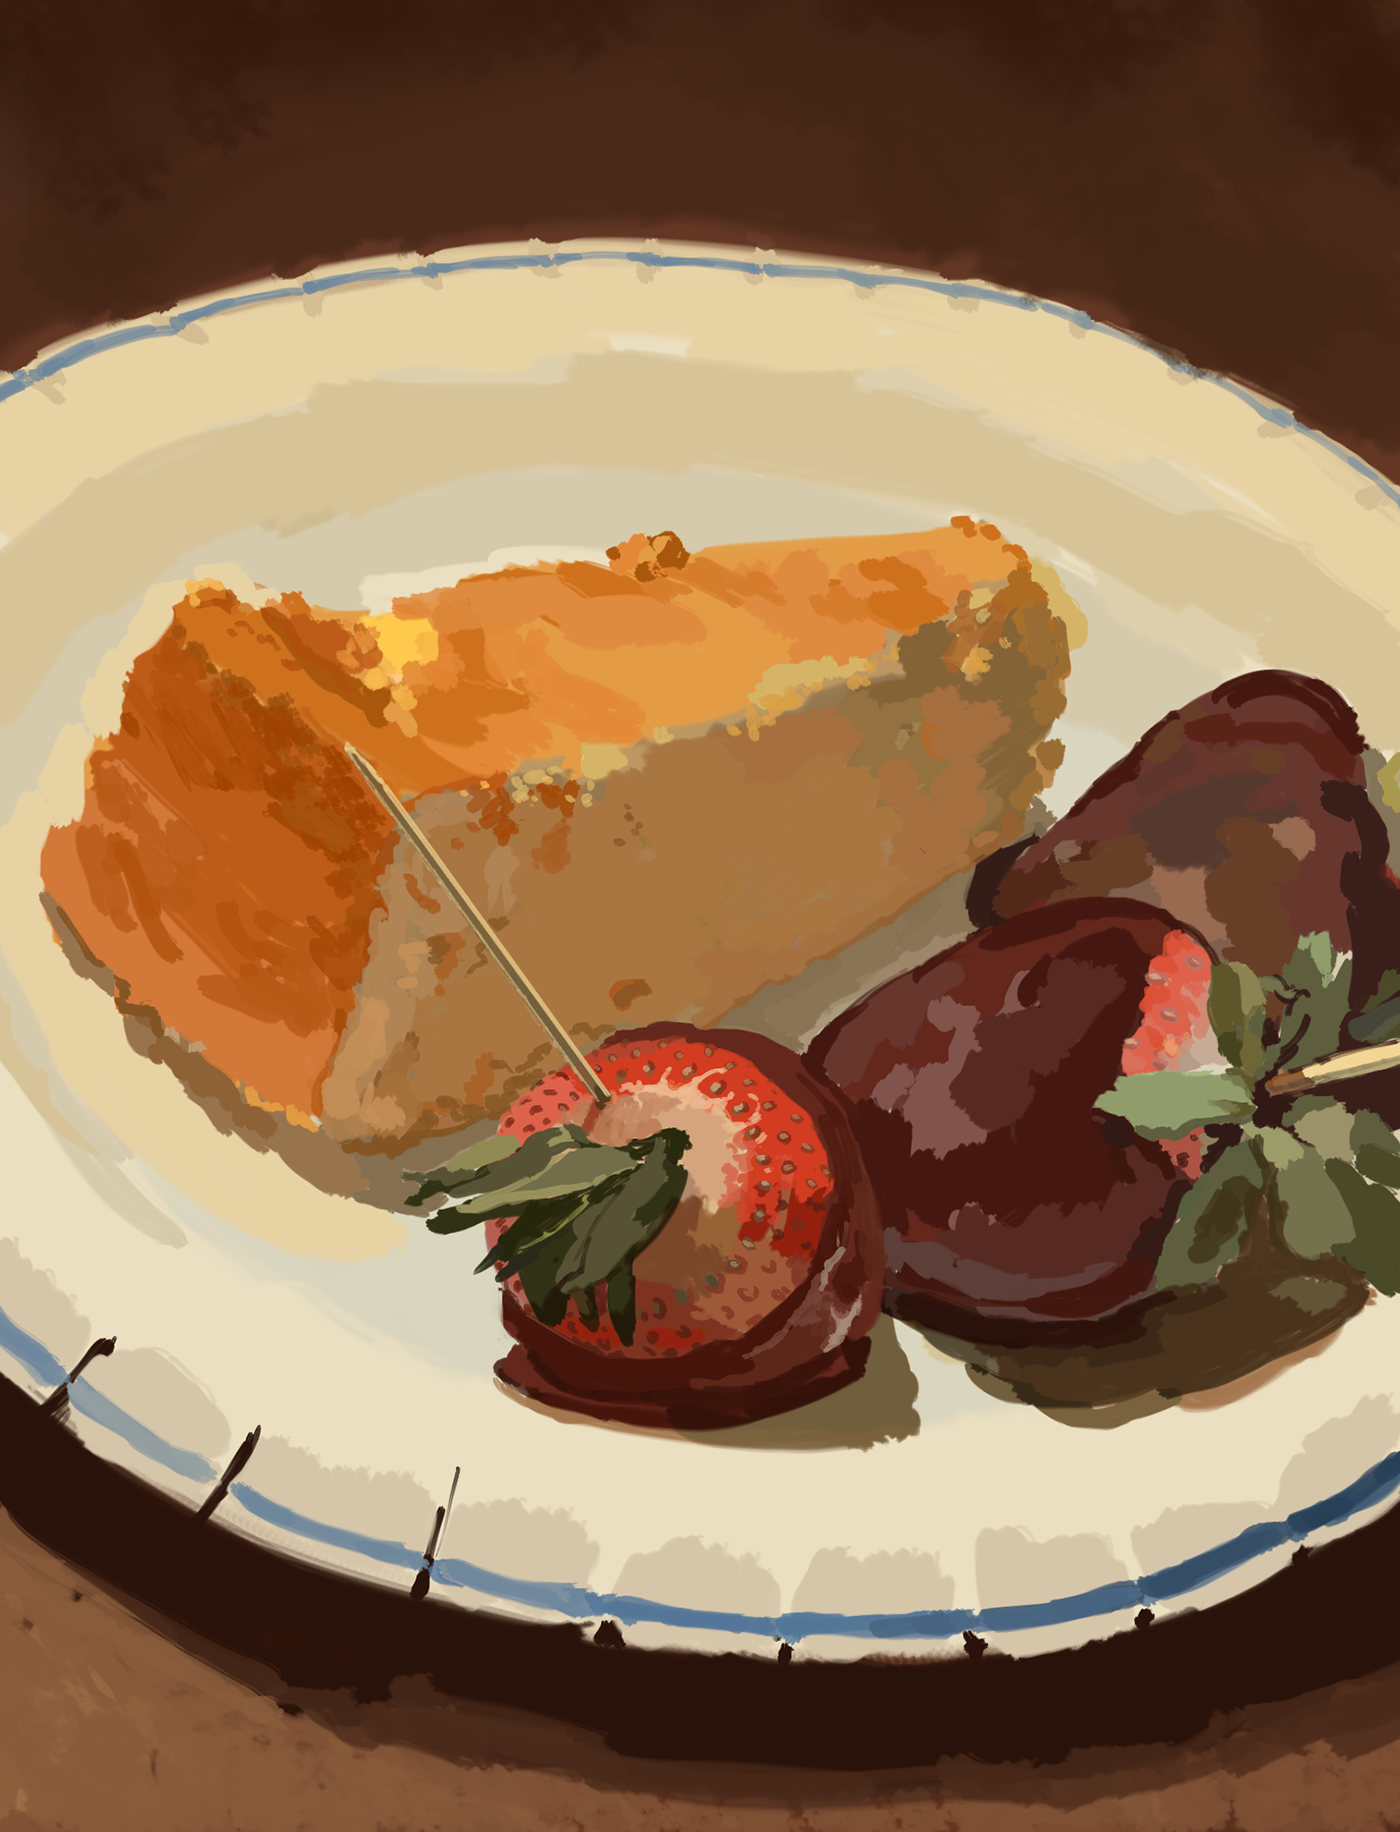 Food  Digital Art  cheesecake souffle chocolate strawberries delicious